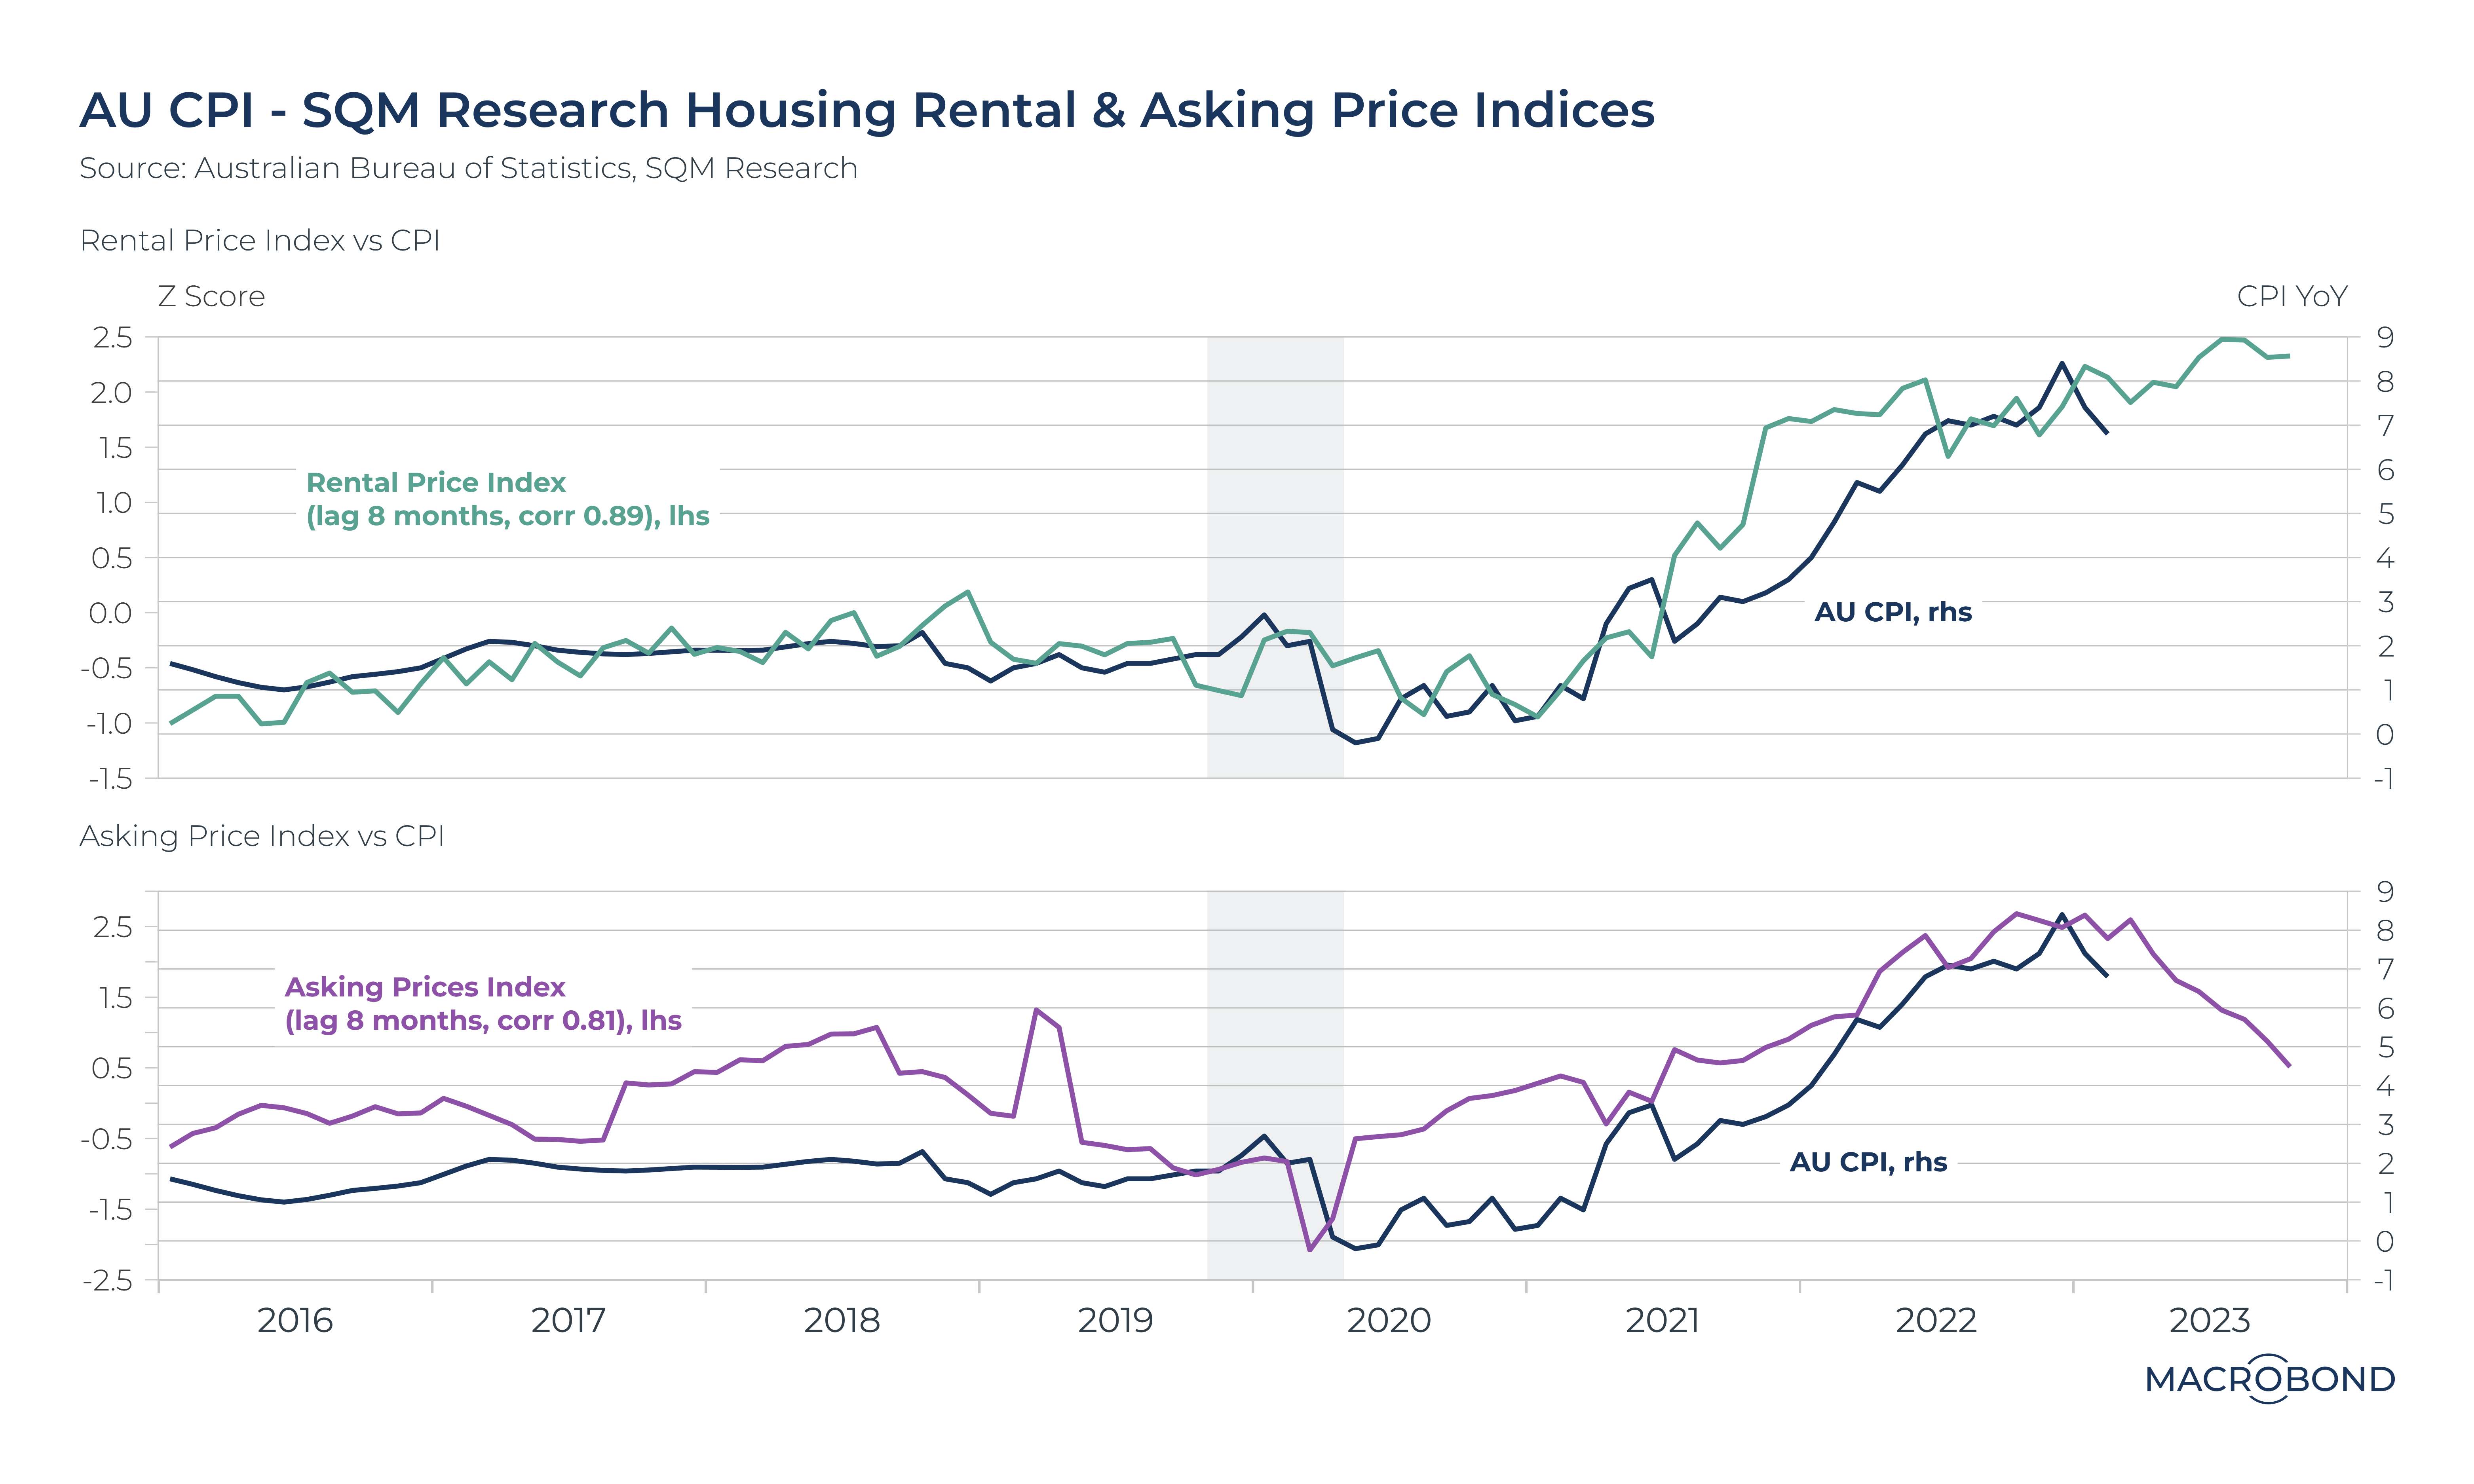 Australia CPI Leading Indicators - SQM Research Housing Rental & Asking Price Indices